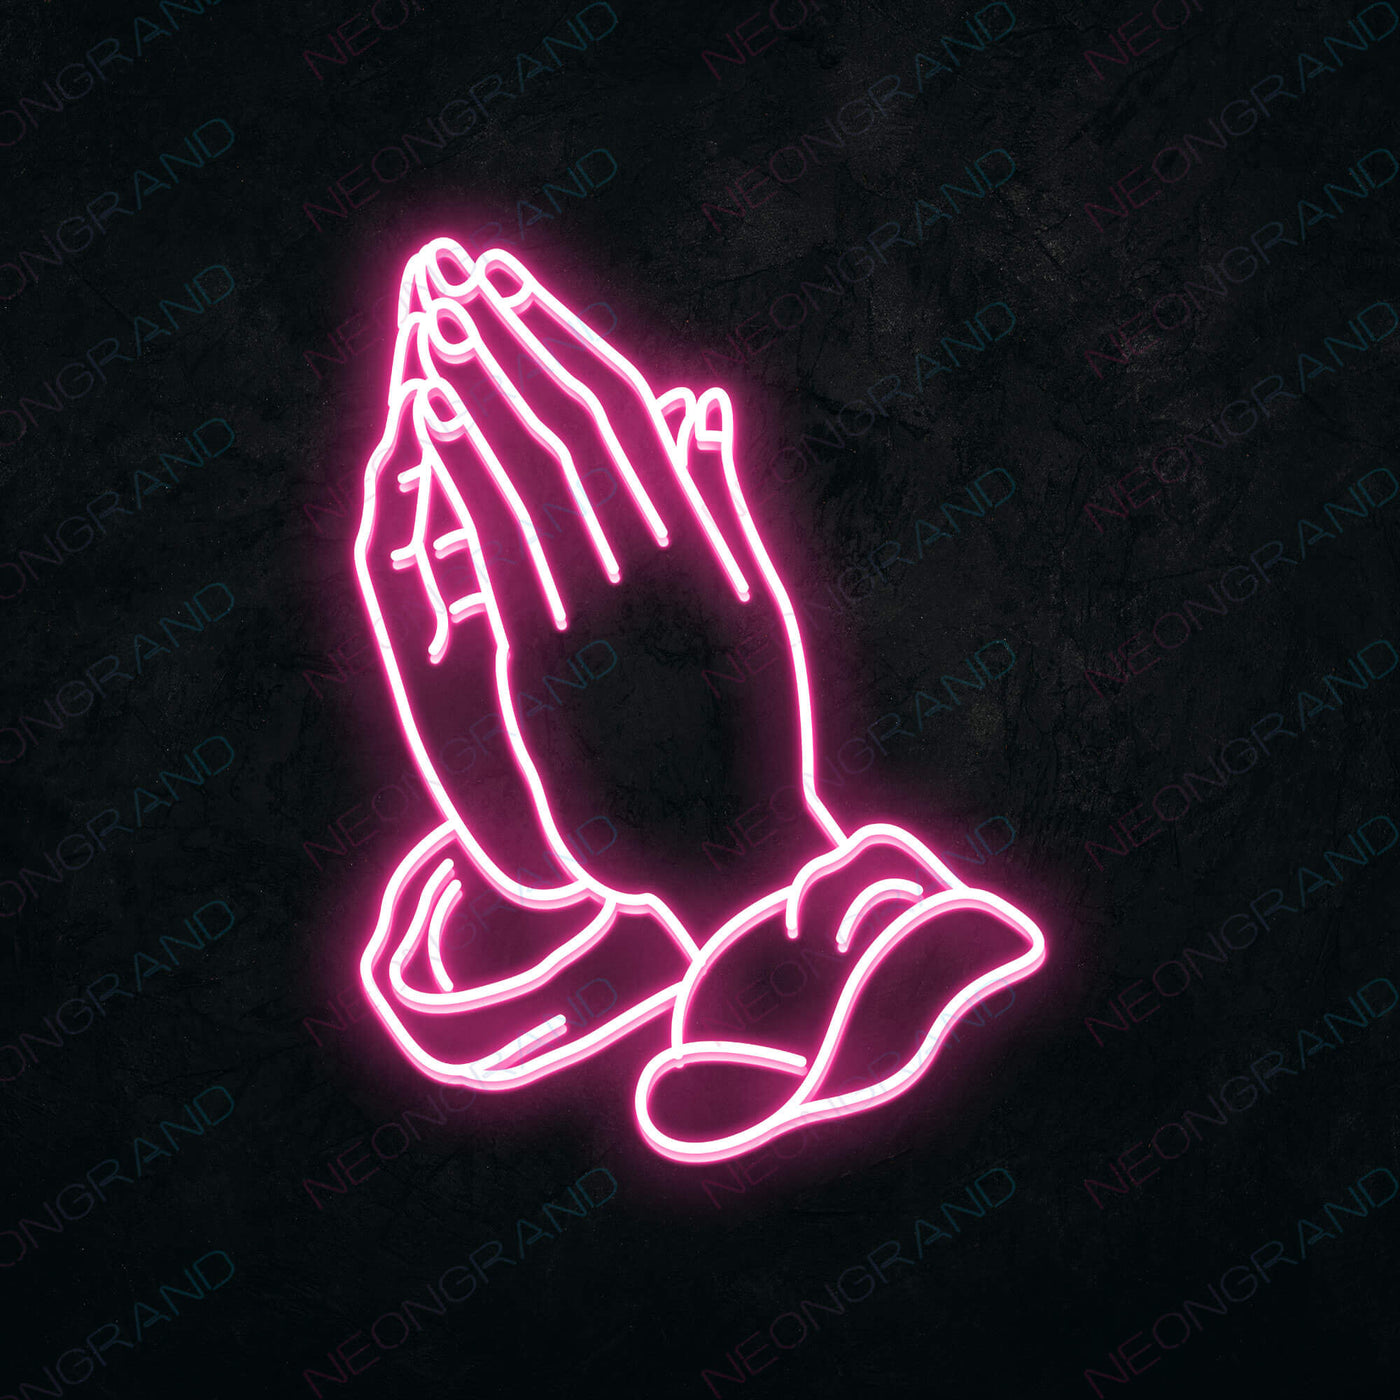 Neon Praying Hands Sign Led Light pink